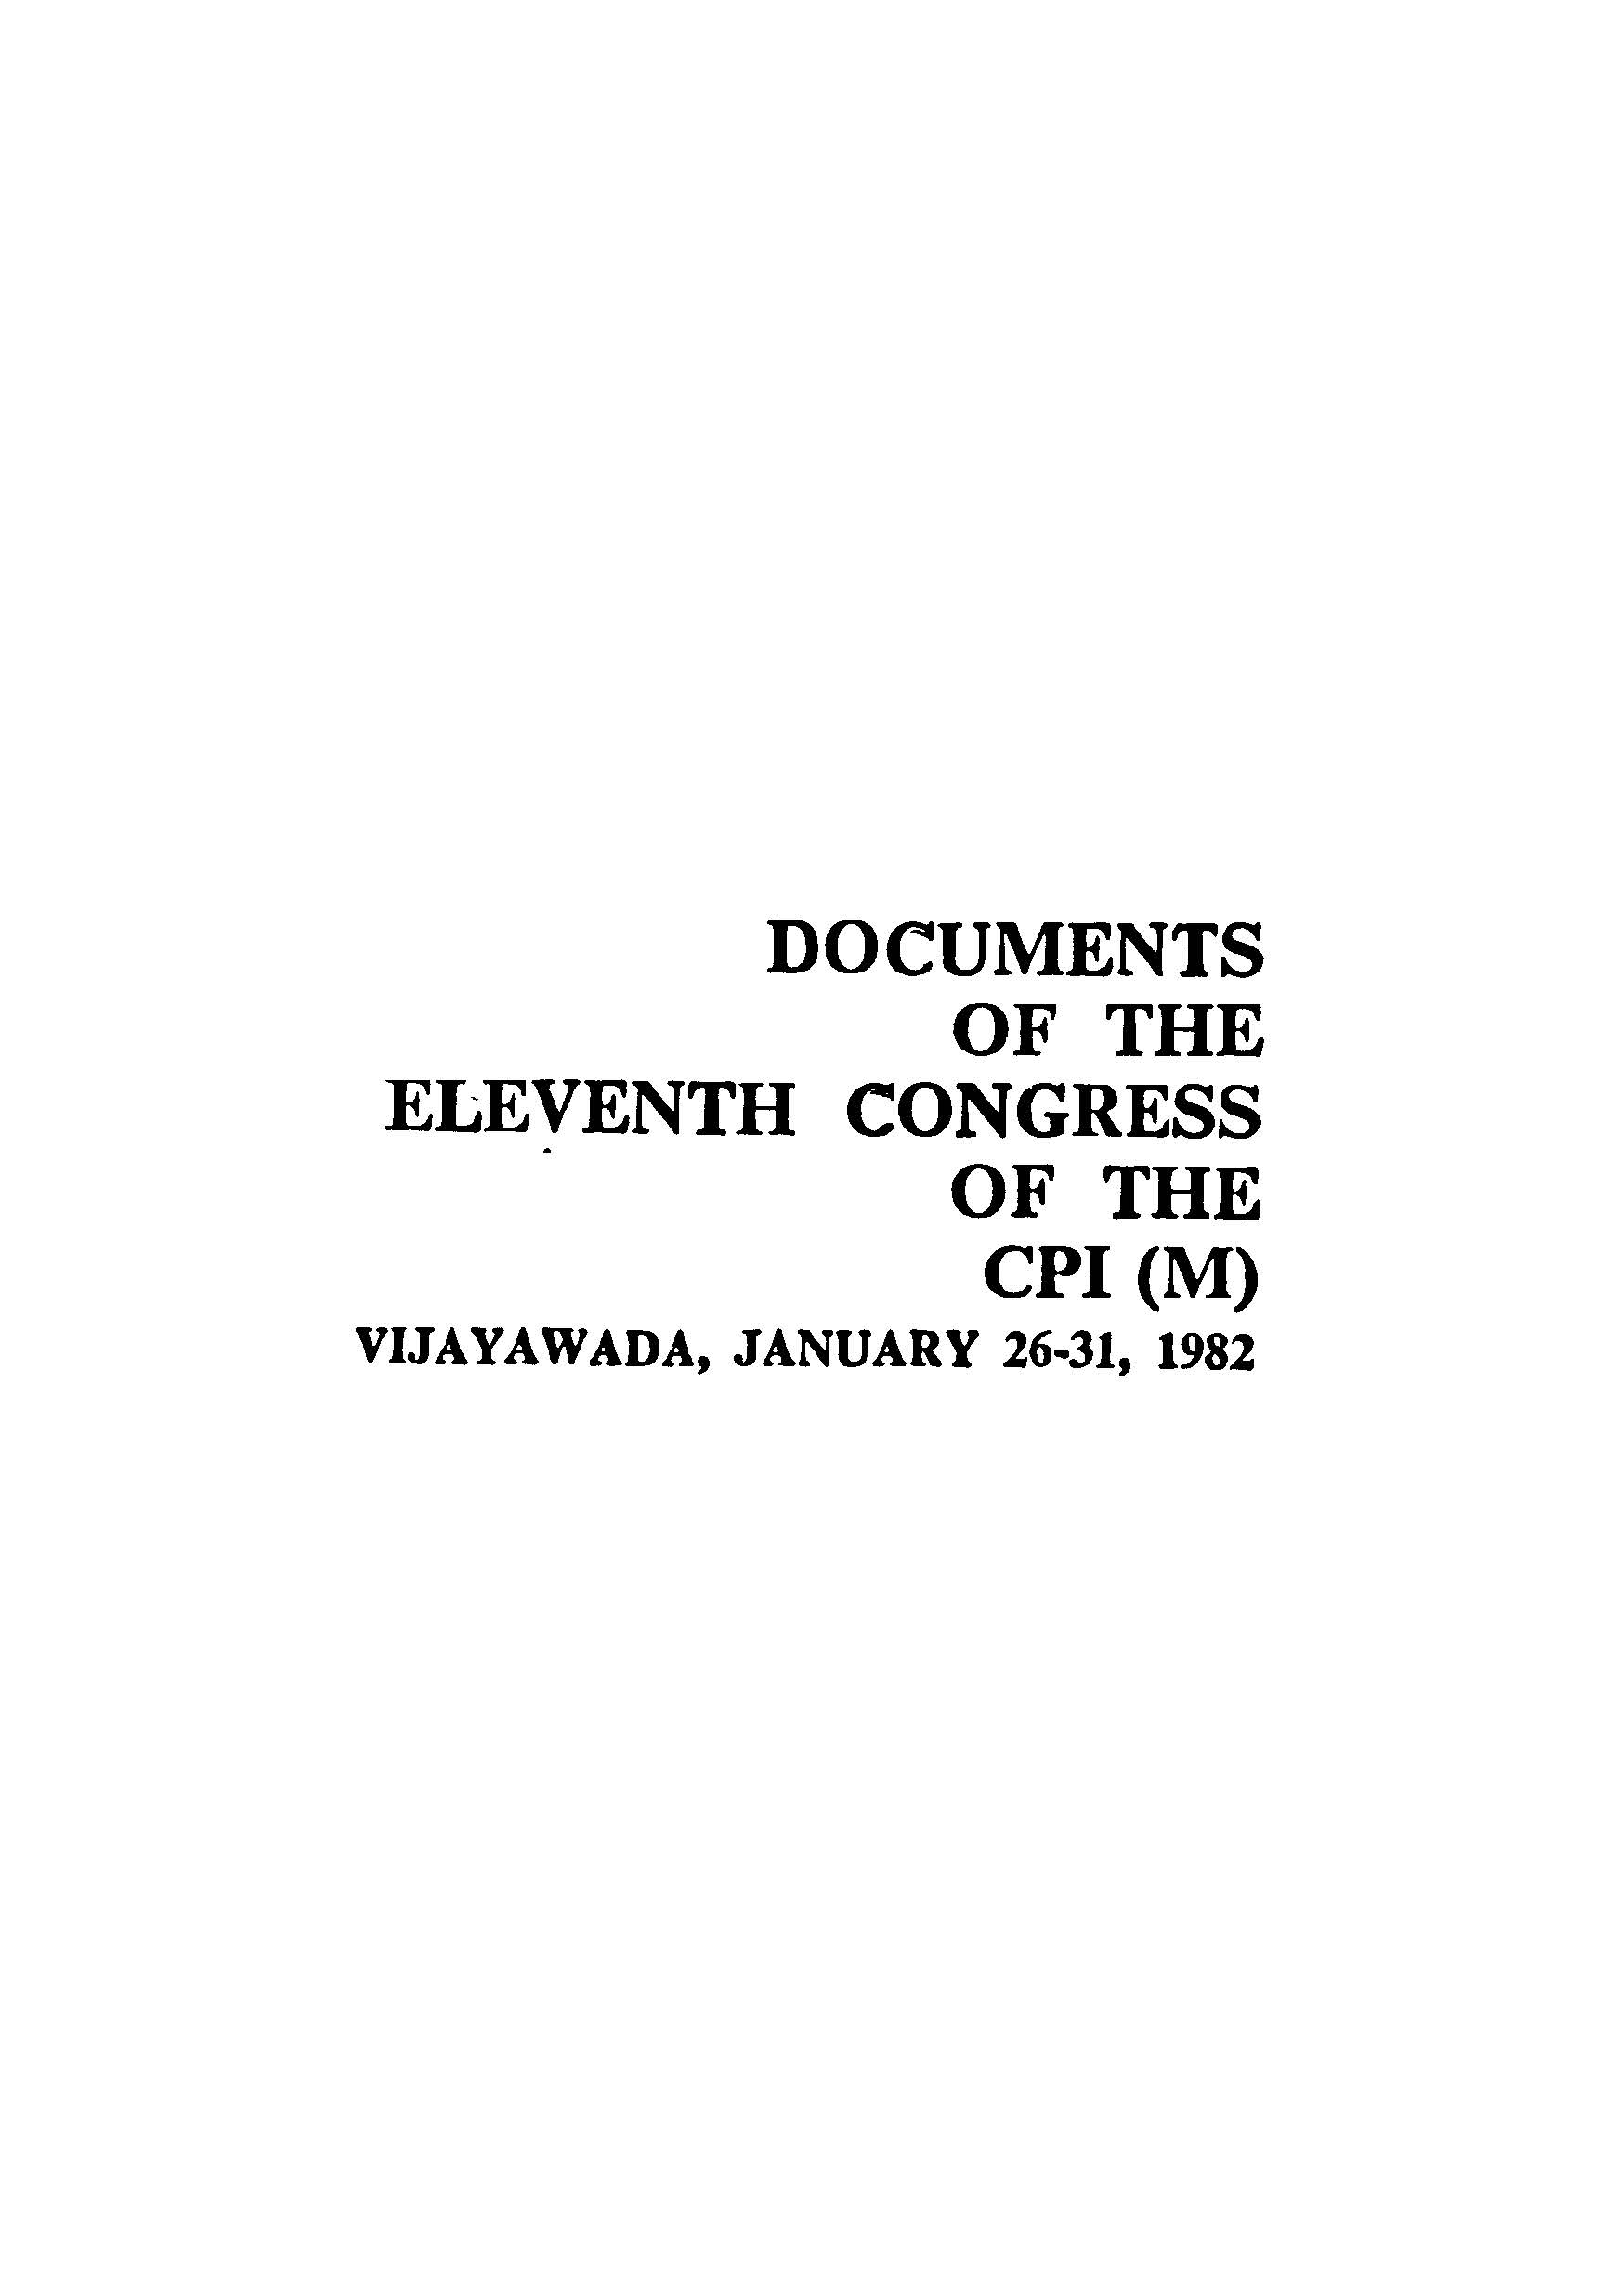 Documents of the eleventh congress of the cpi(m) vijayawada, january 26-31, 1982